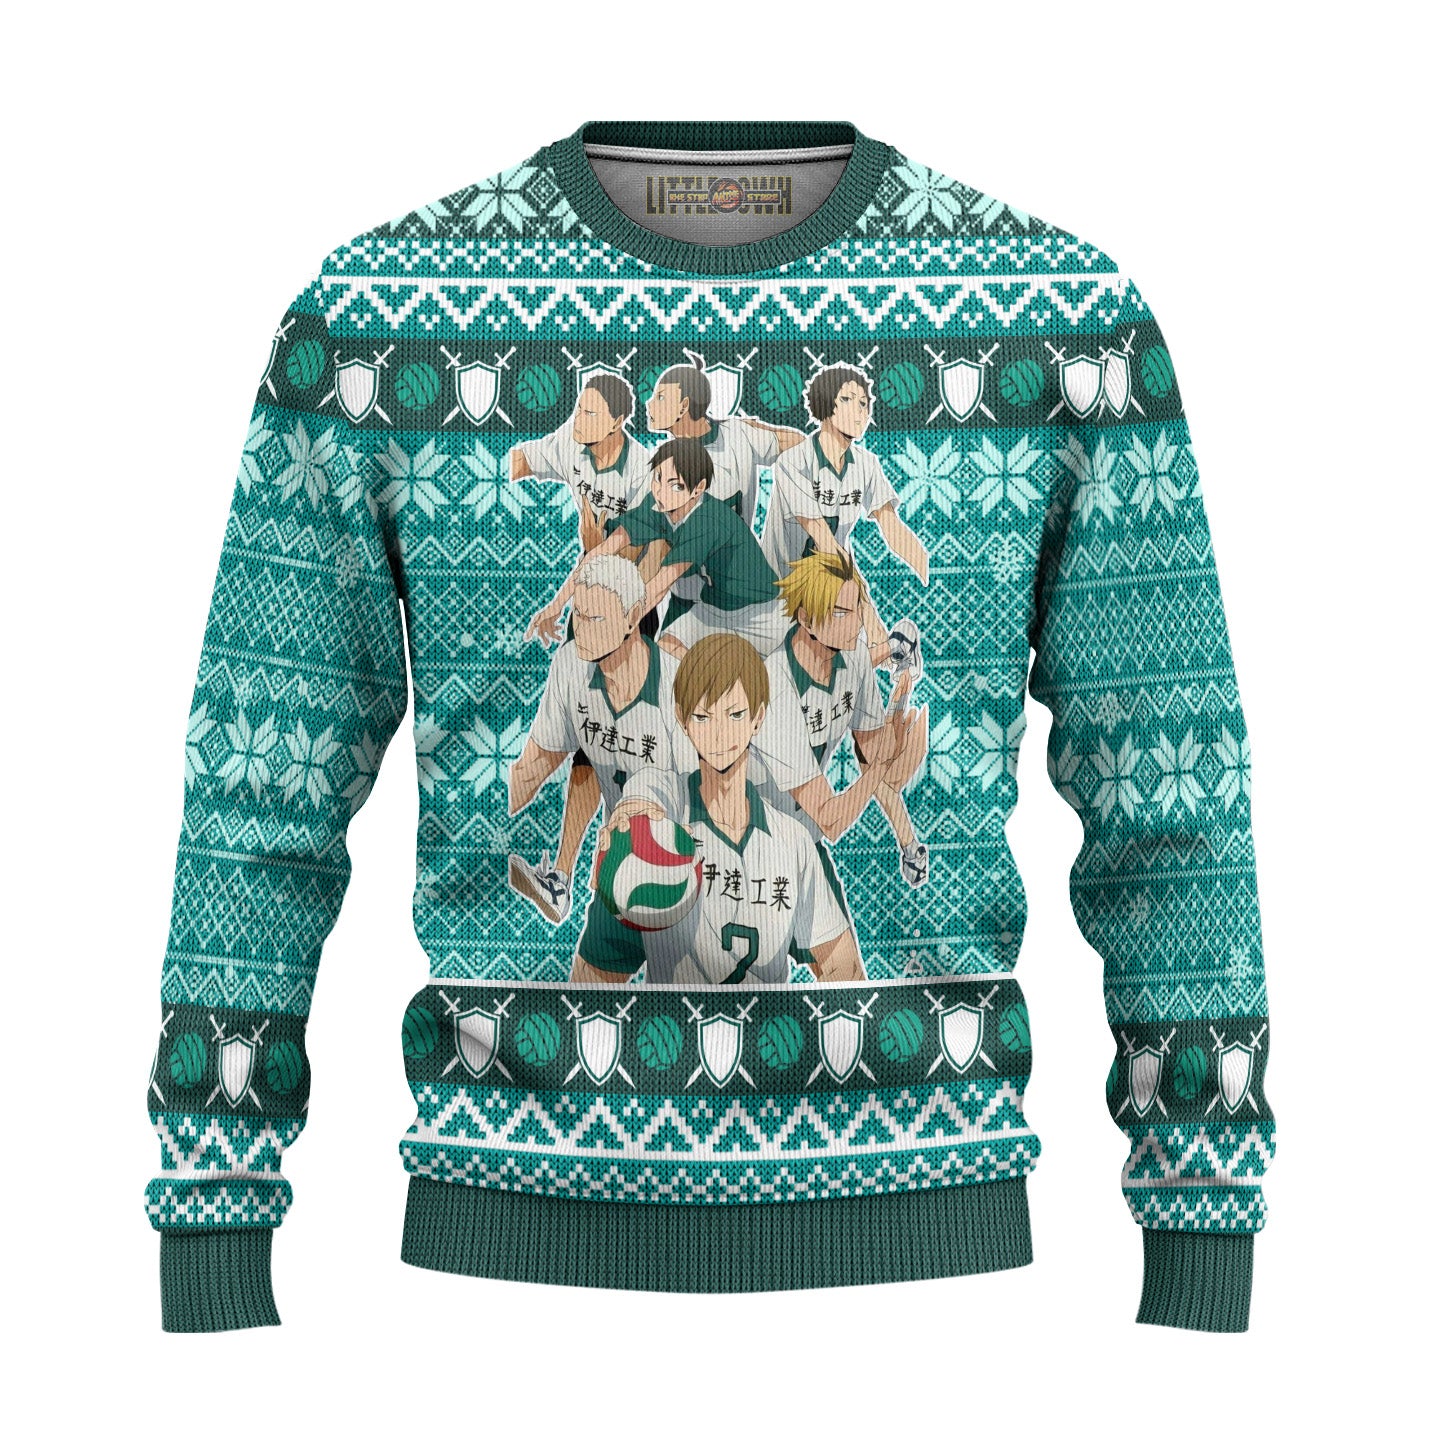 Fukurodani Academy Ugly Christmas Sweater Haikyuu Anime New Design